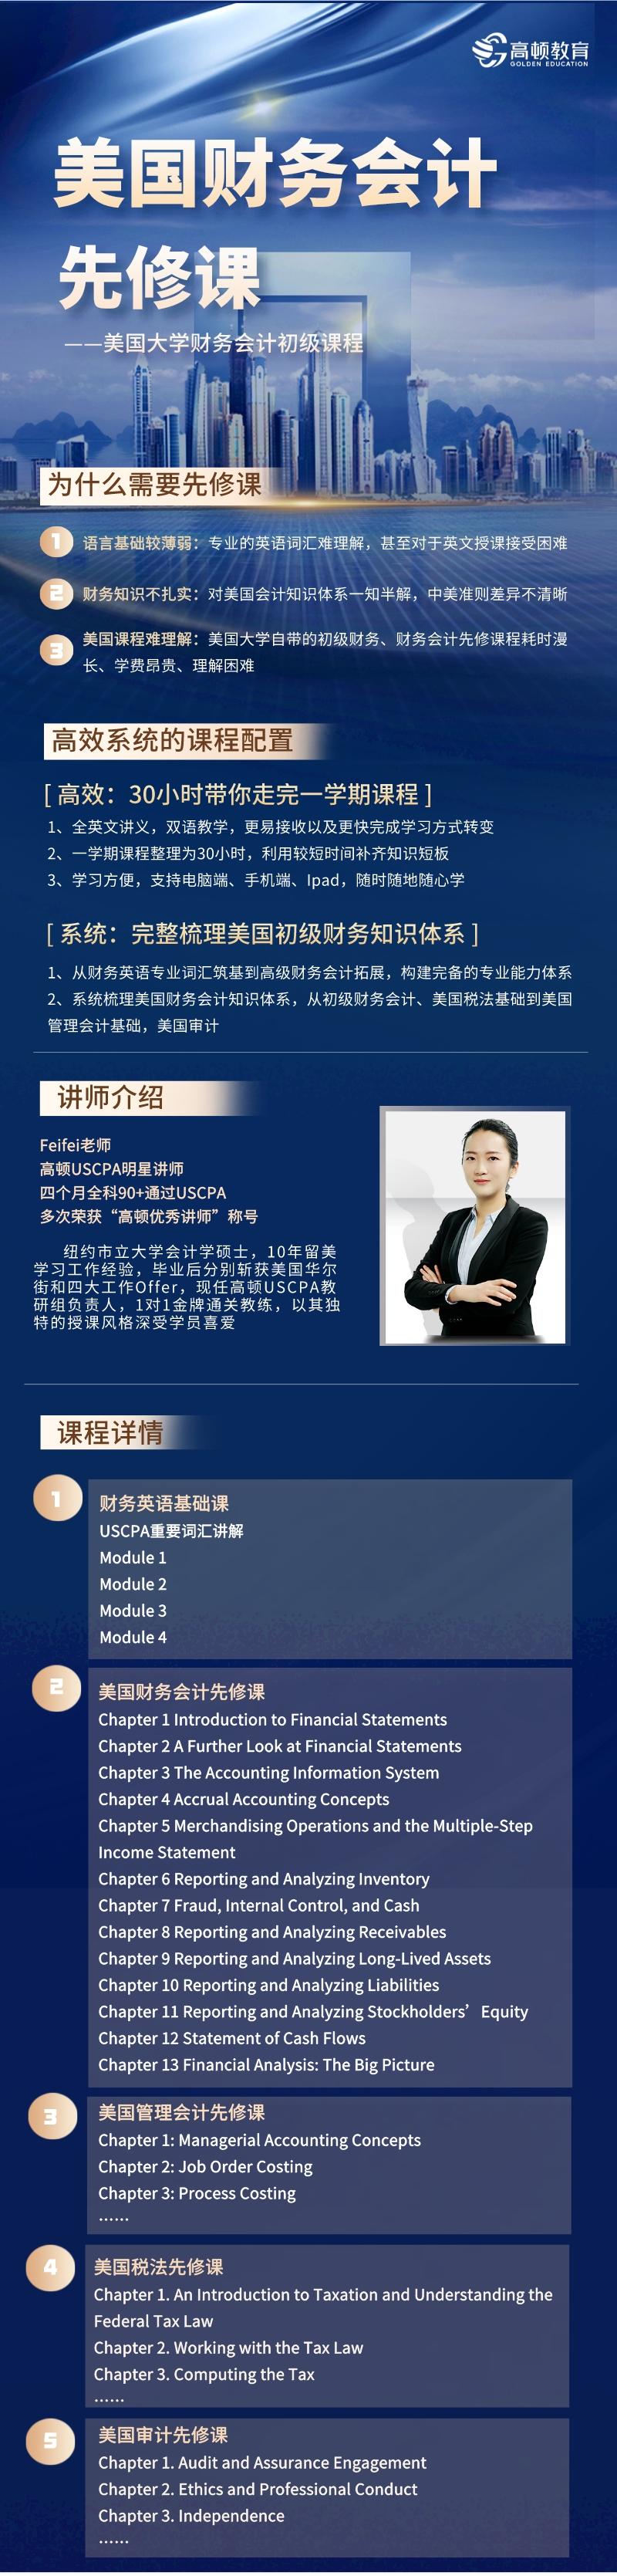 https://simg01.gaodunwangxiao.com/uploadfiles/product-center/202304/06/d57ed_20230406093538.jpeg